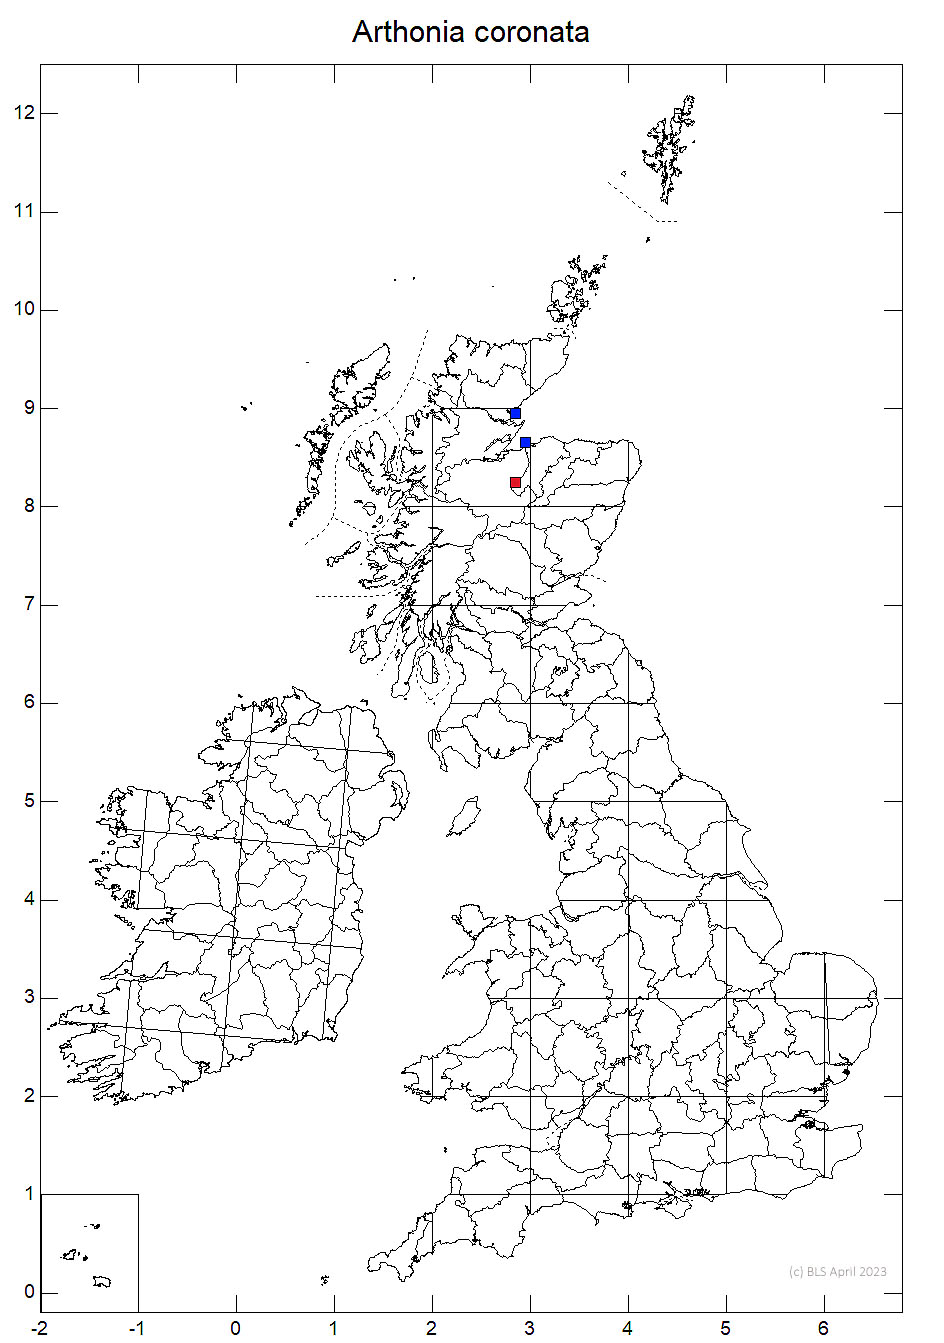 Arthonia coronata 10km sq distribution map